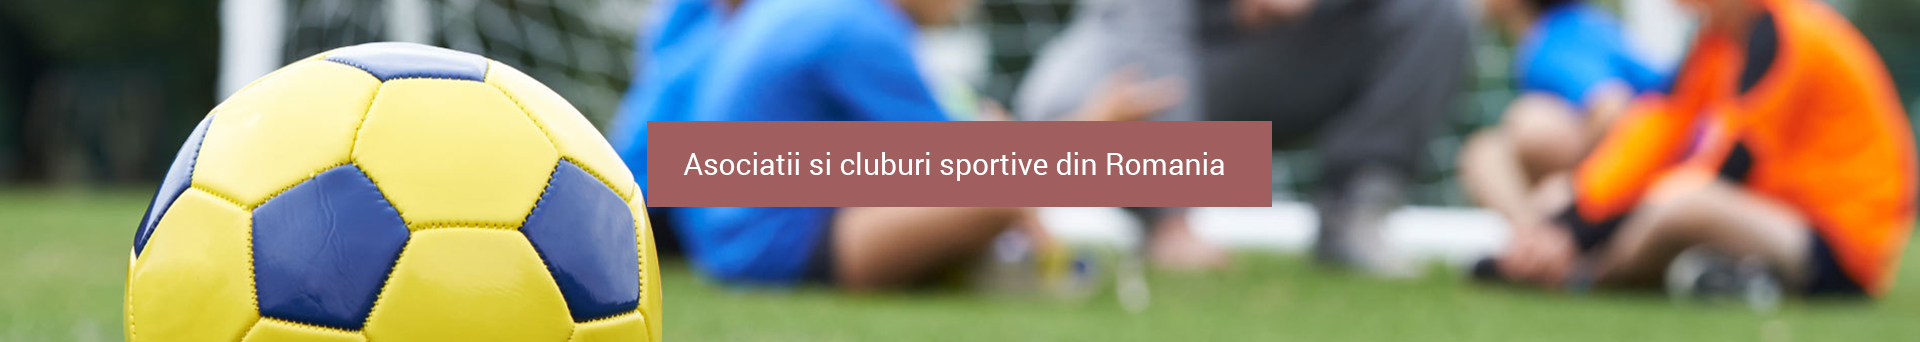 Asociatii si cluburi sportive din Romania